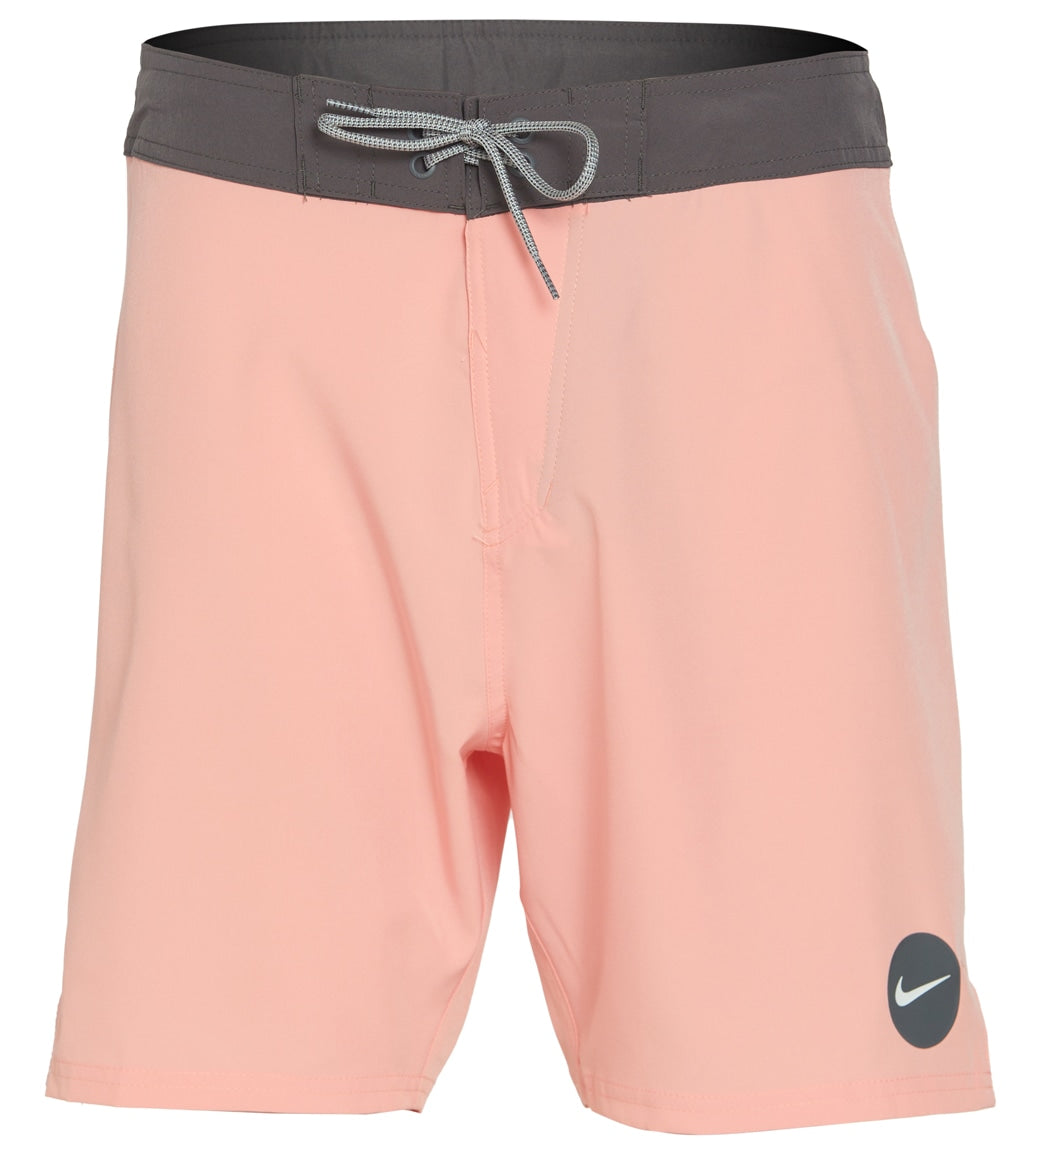 Nike Mens 18 Essential Boardshort